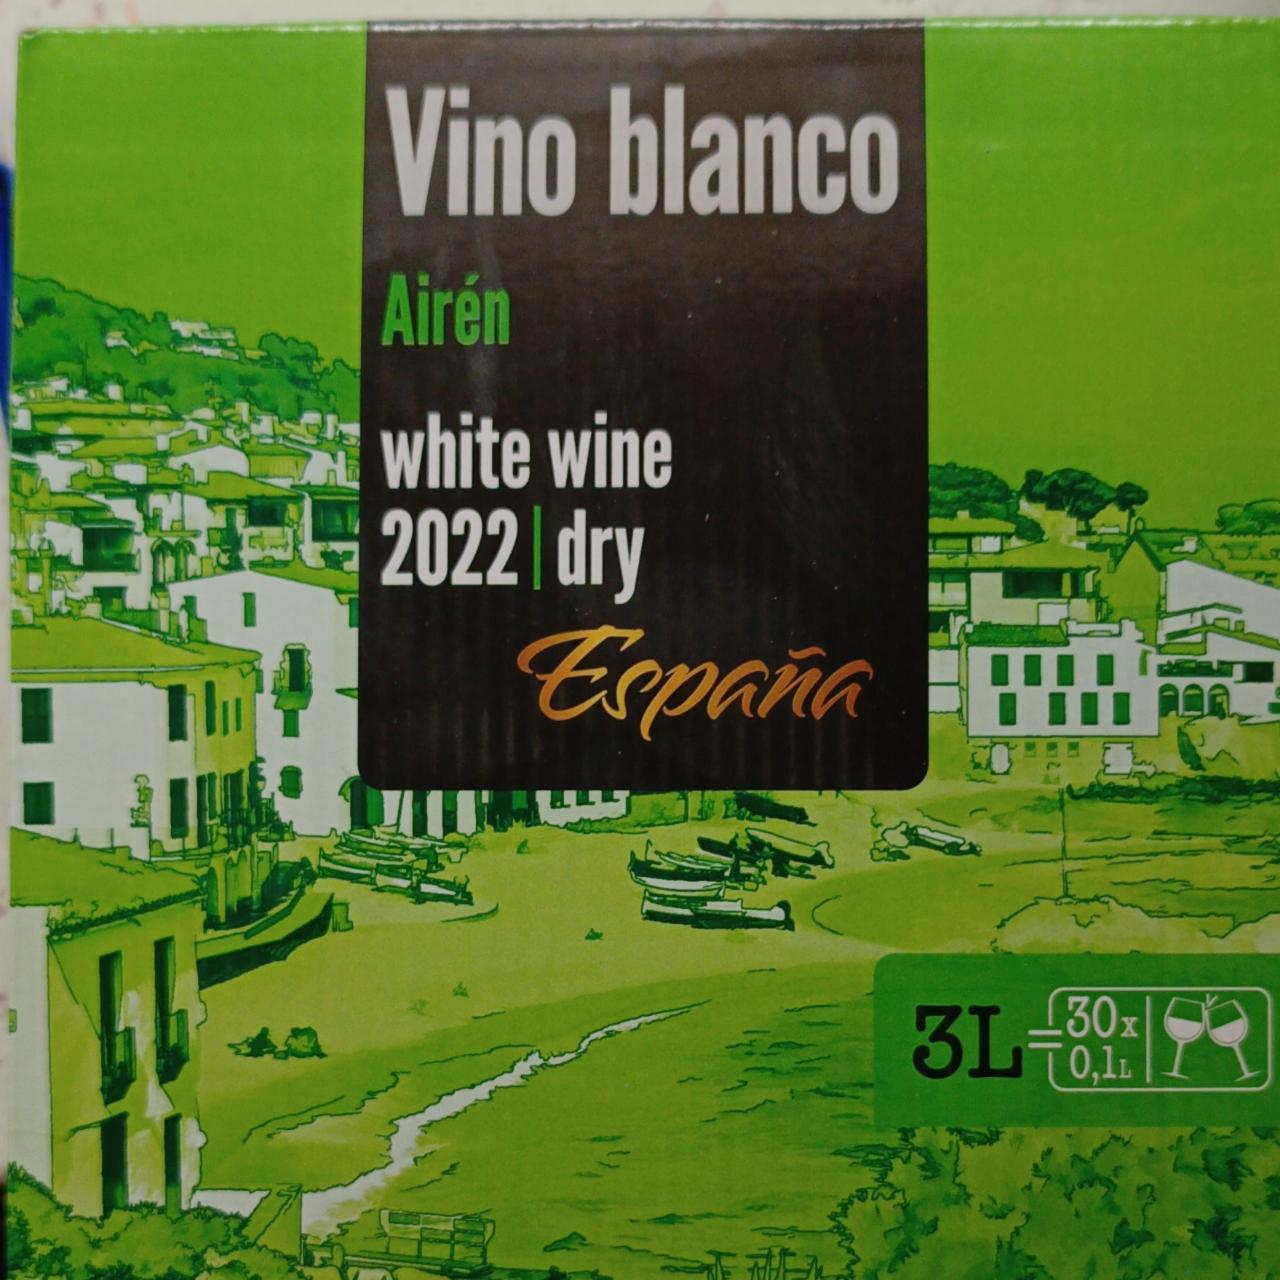 Fotografie - Airén white wine 2022 dry Vino blanco